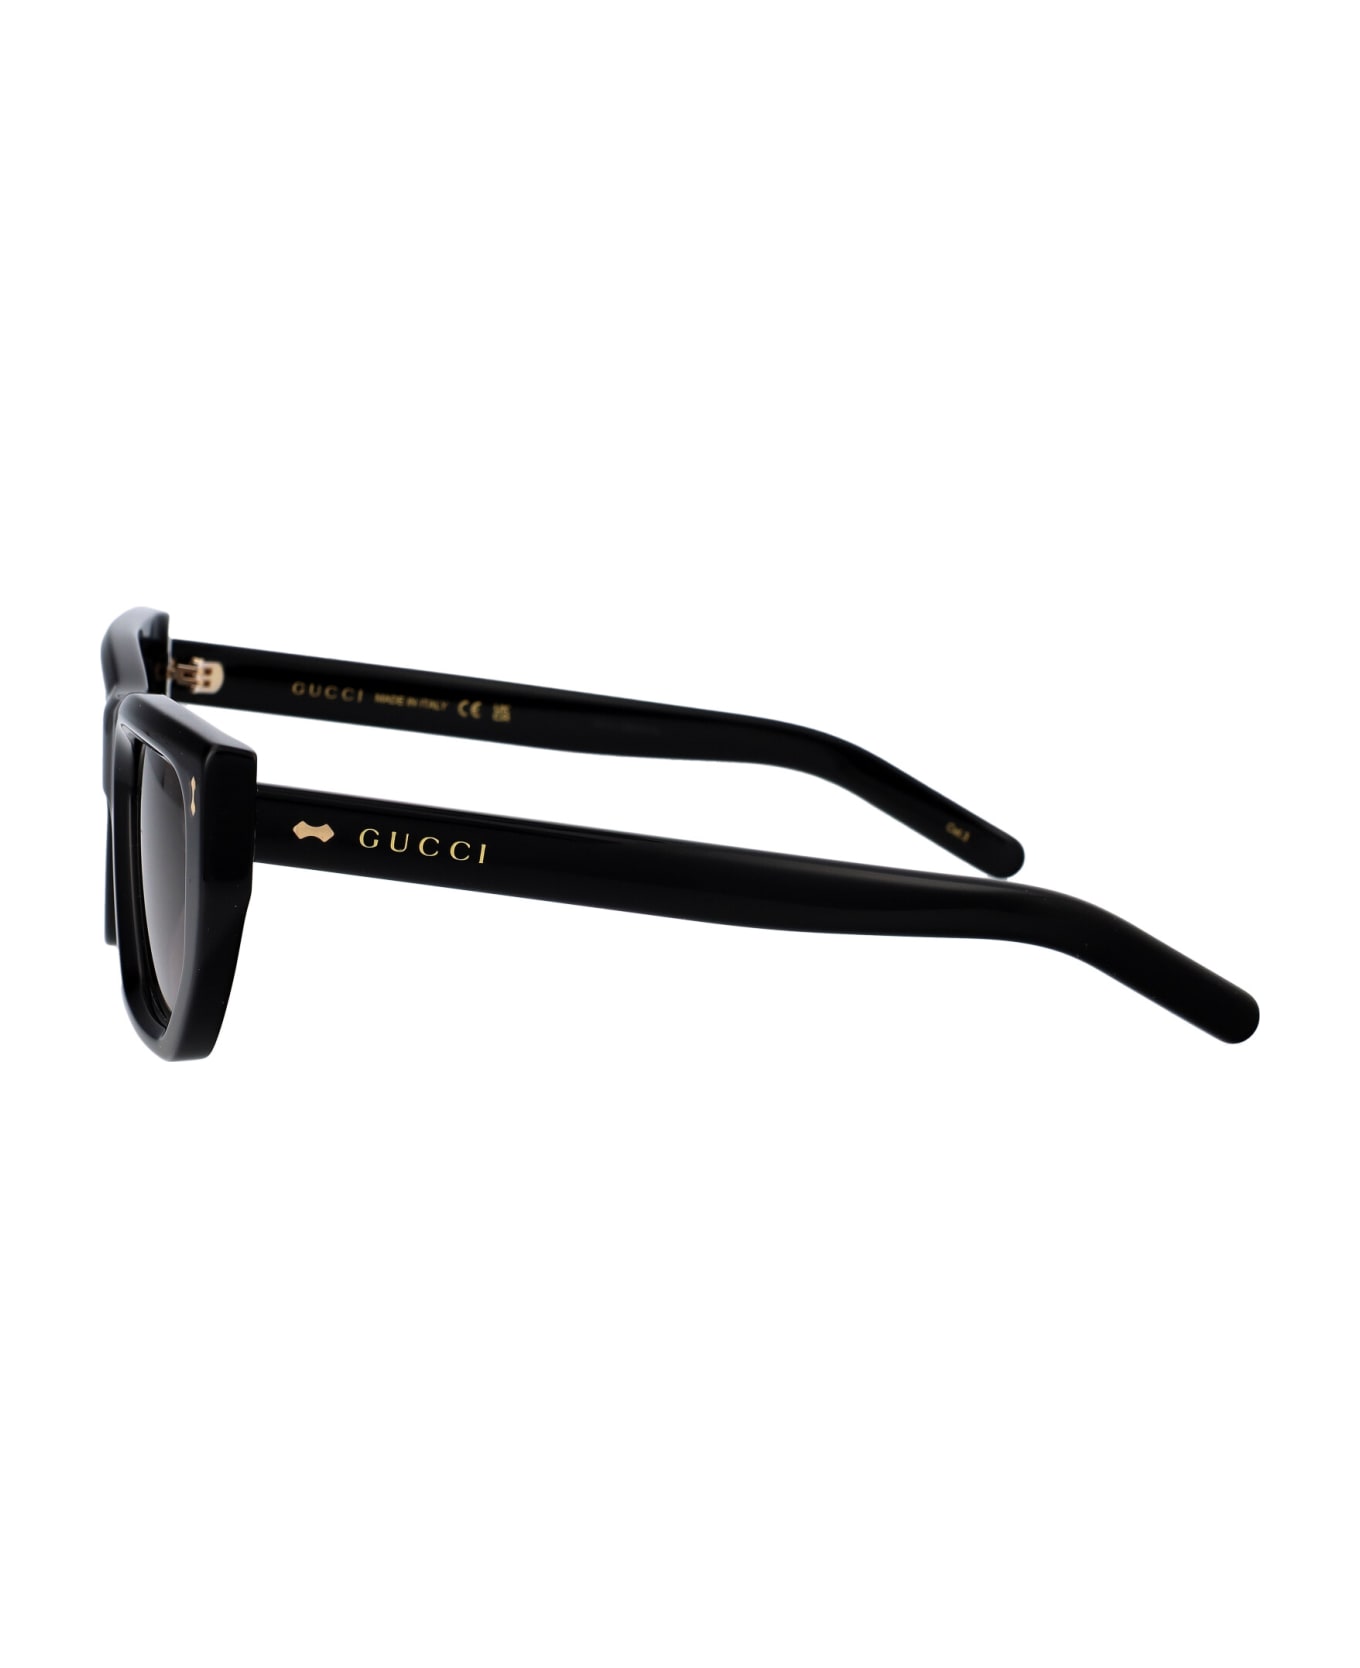 Gucci Eyewear Gg1520s Sunglasses - 001 BLACK BLACK GREY